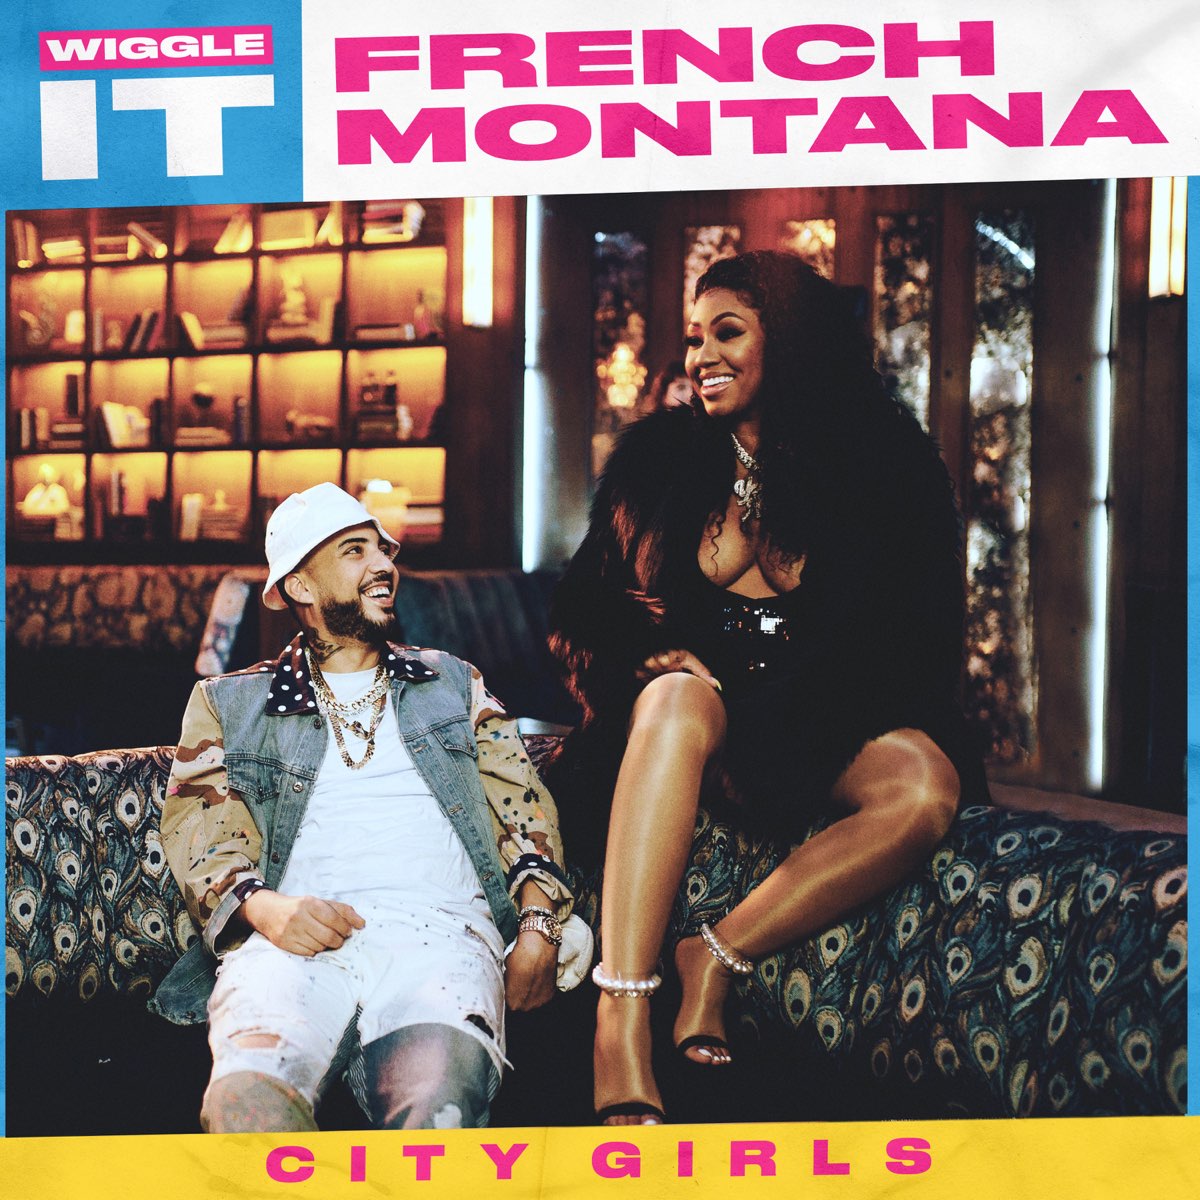 French Montana Feat City Girls Wiggle It